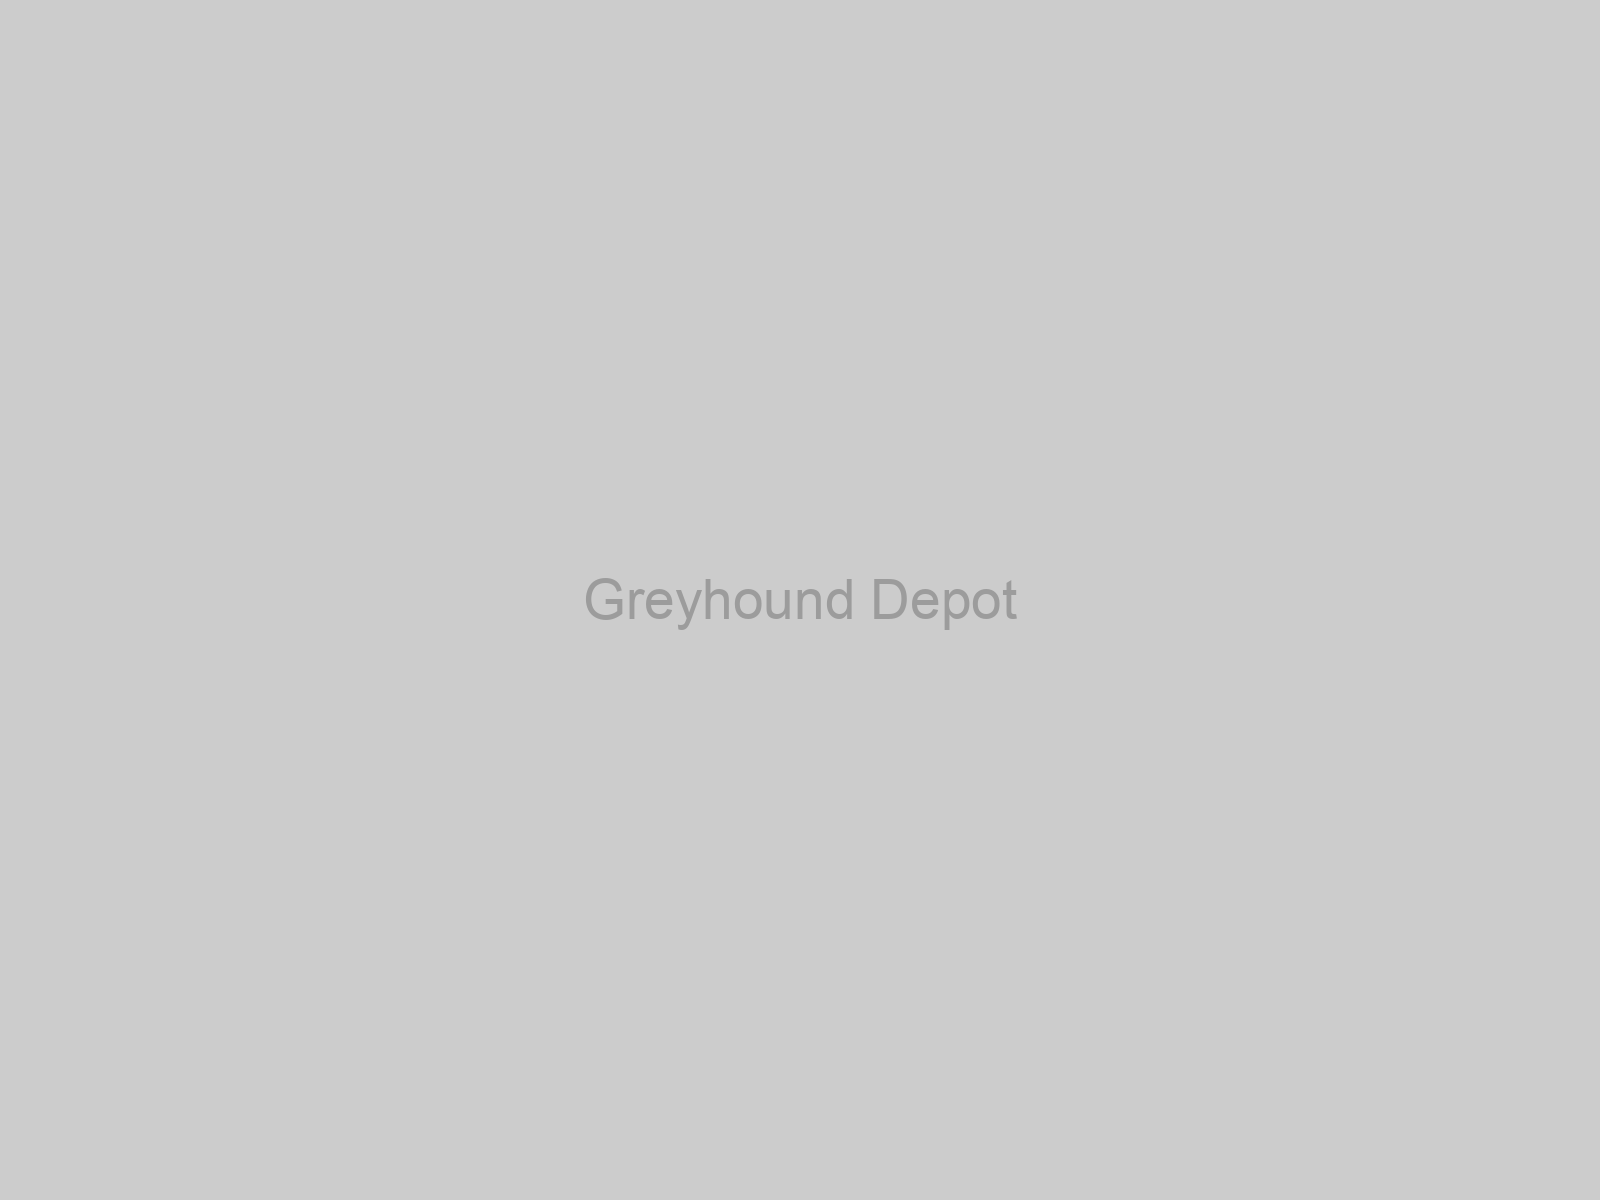 Greyhound Depot